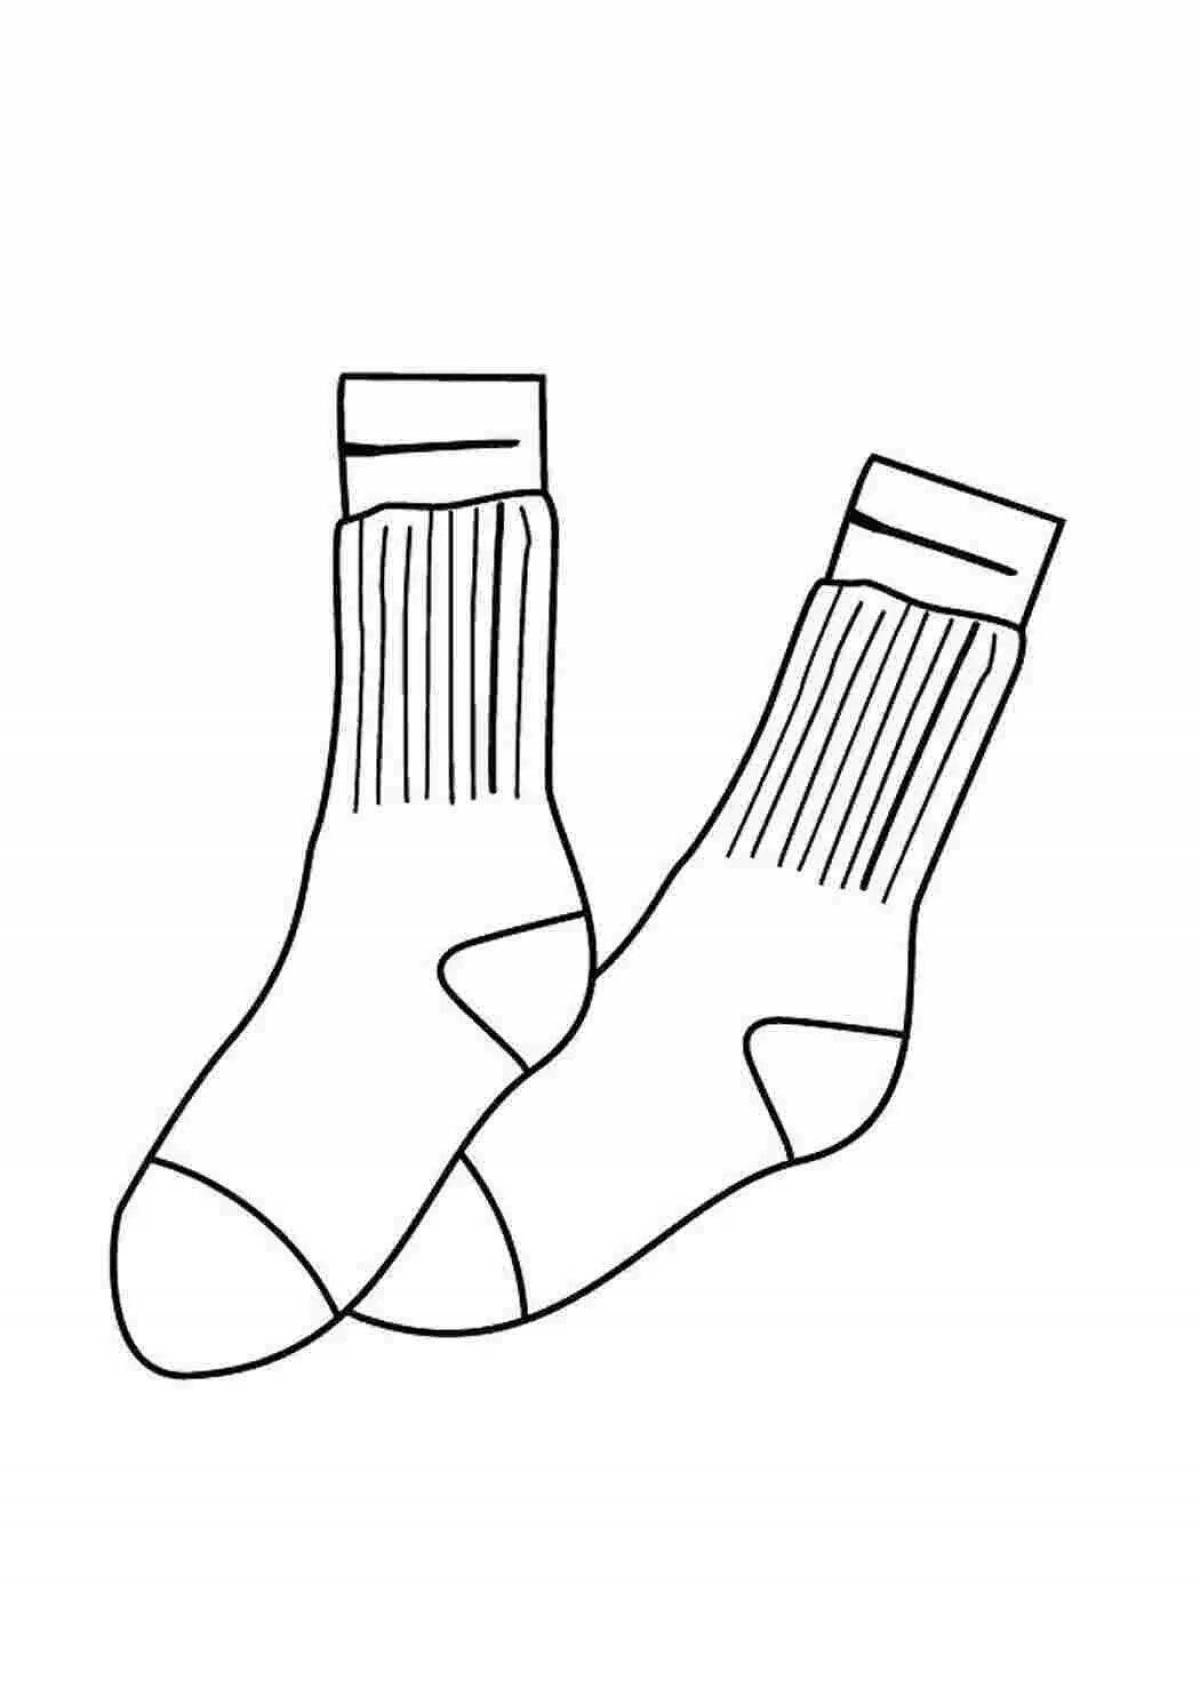 Cozy socks coloring page